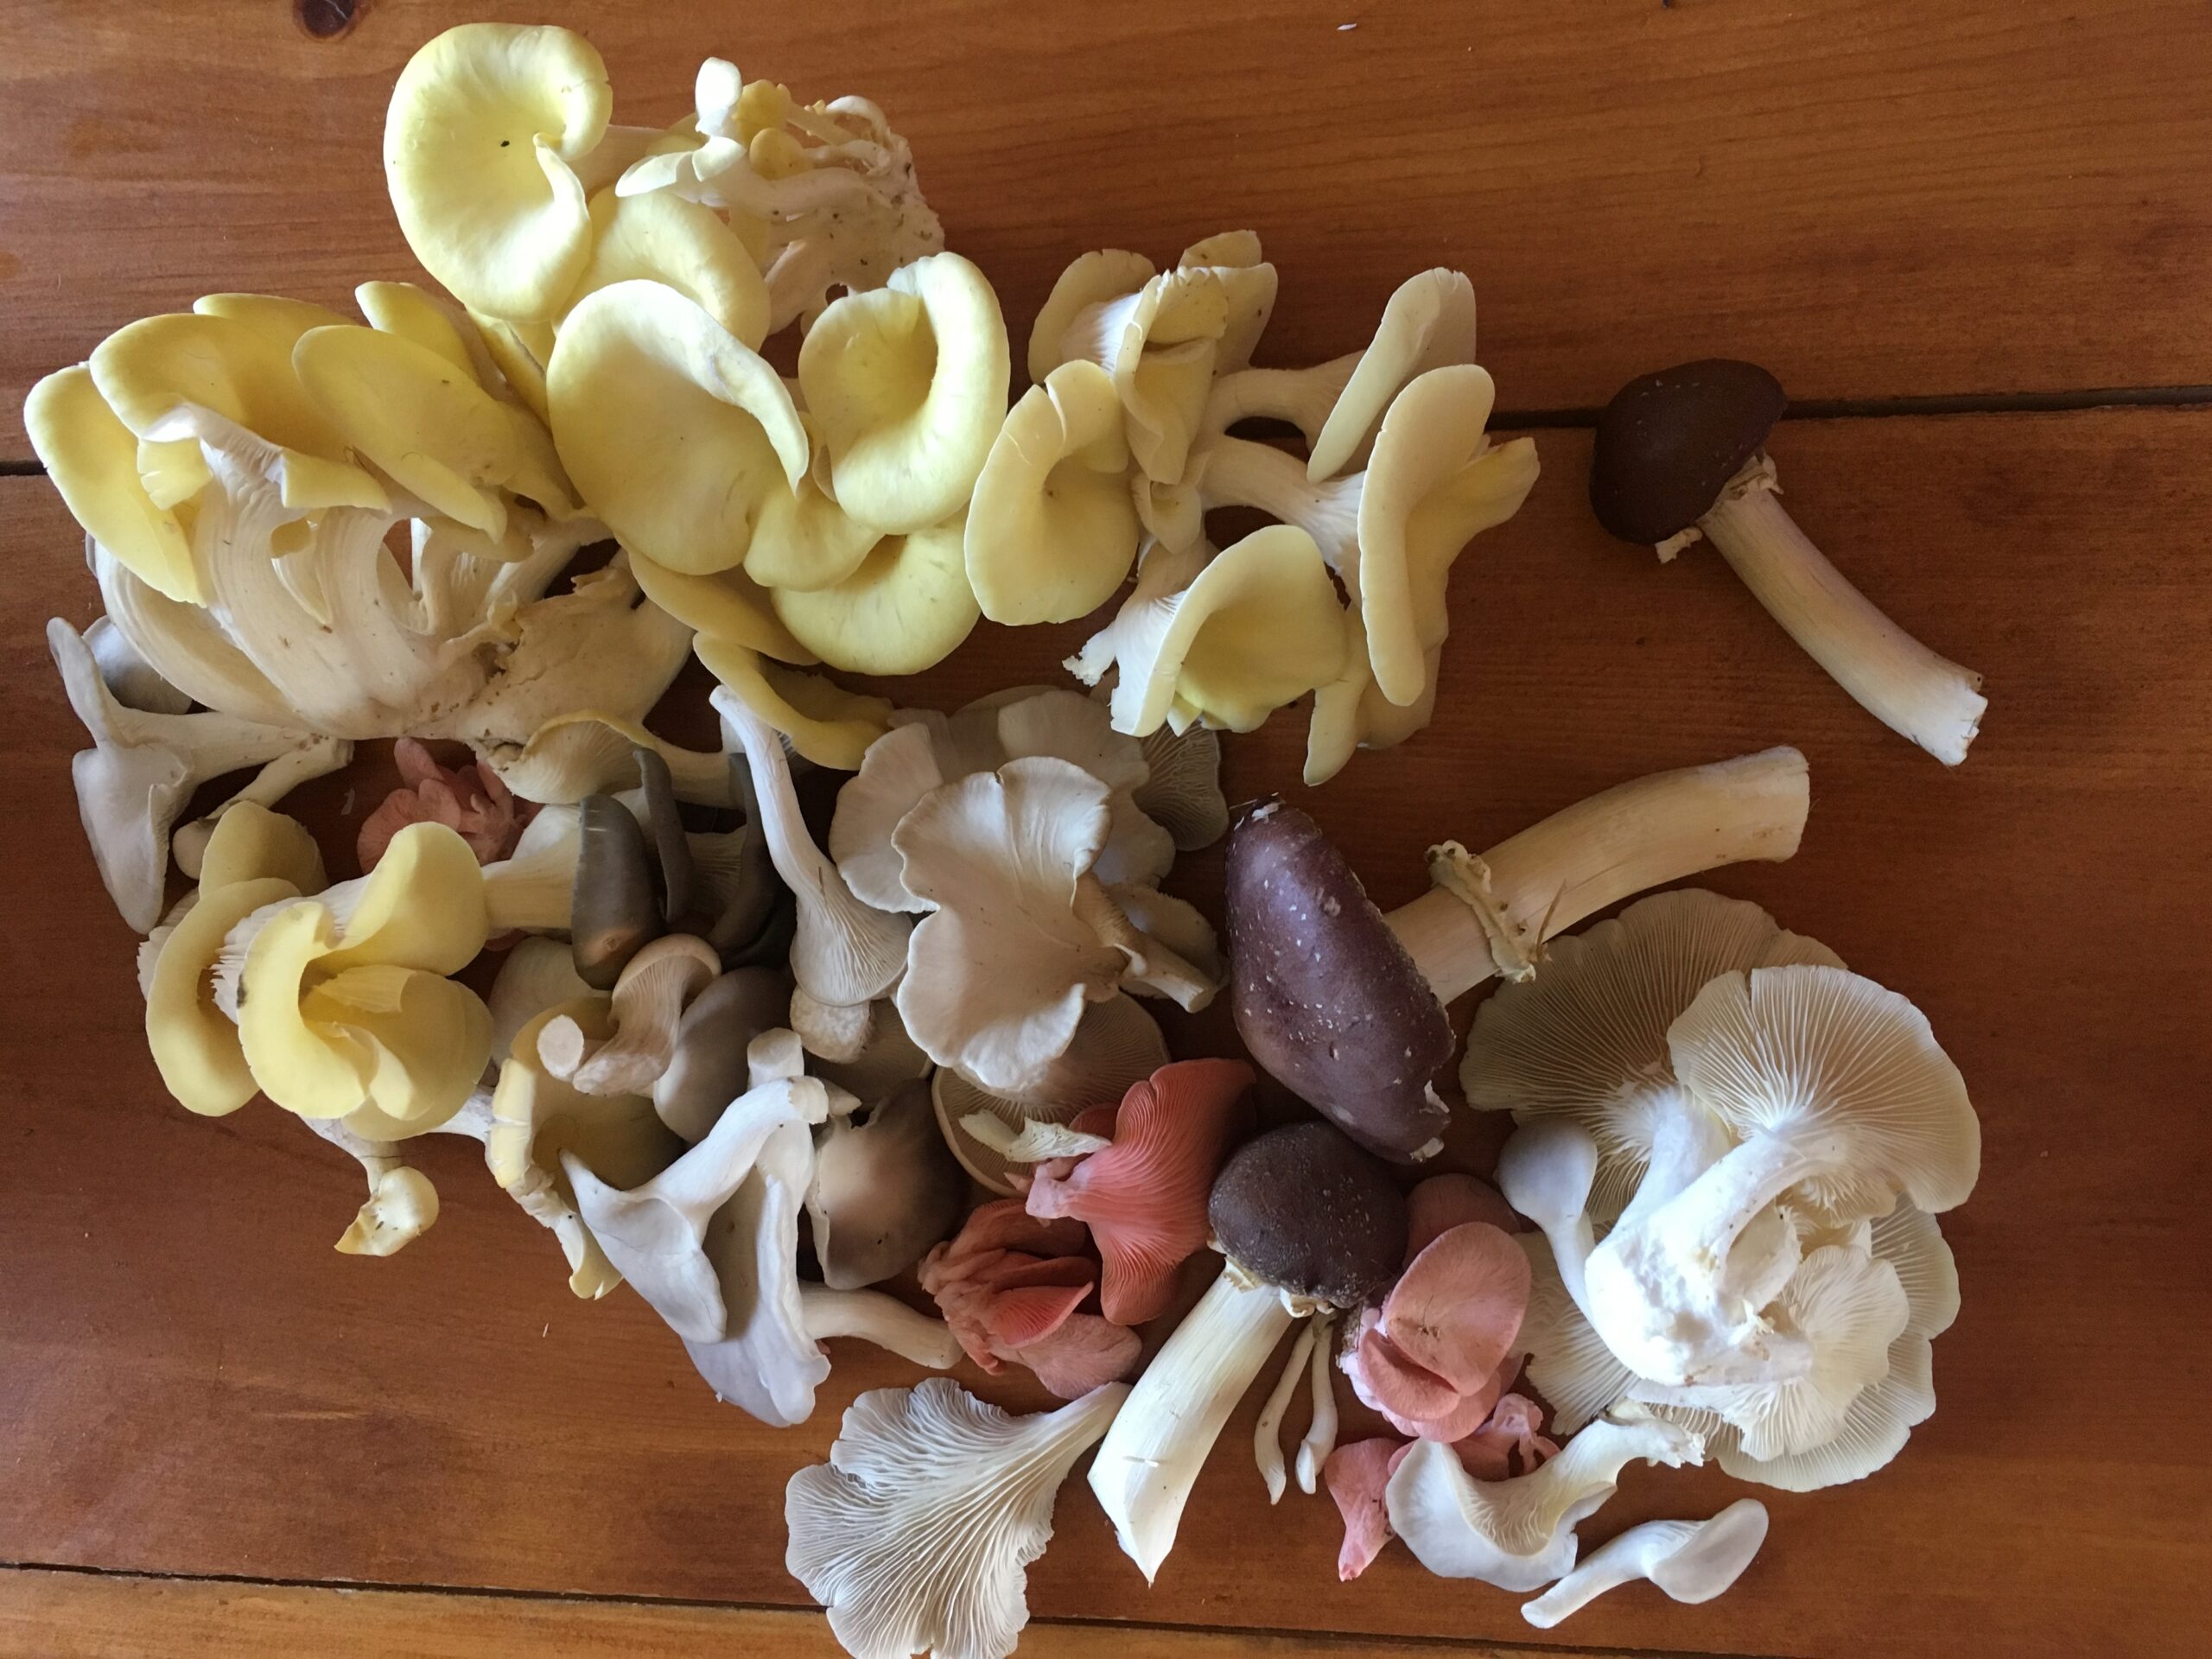 various mushrooms on a table